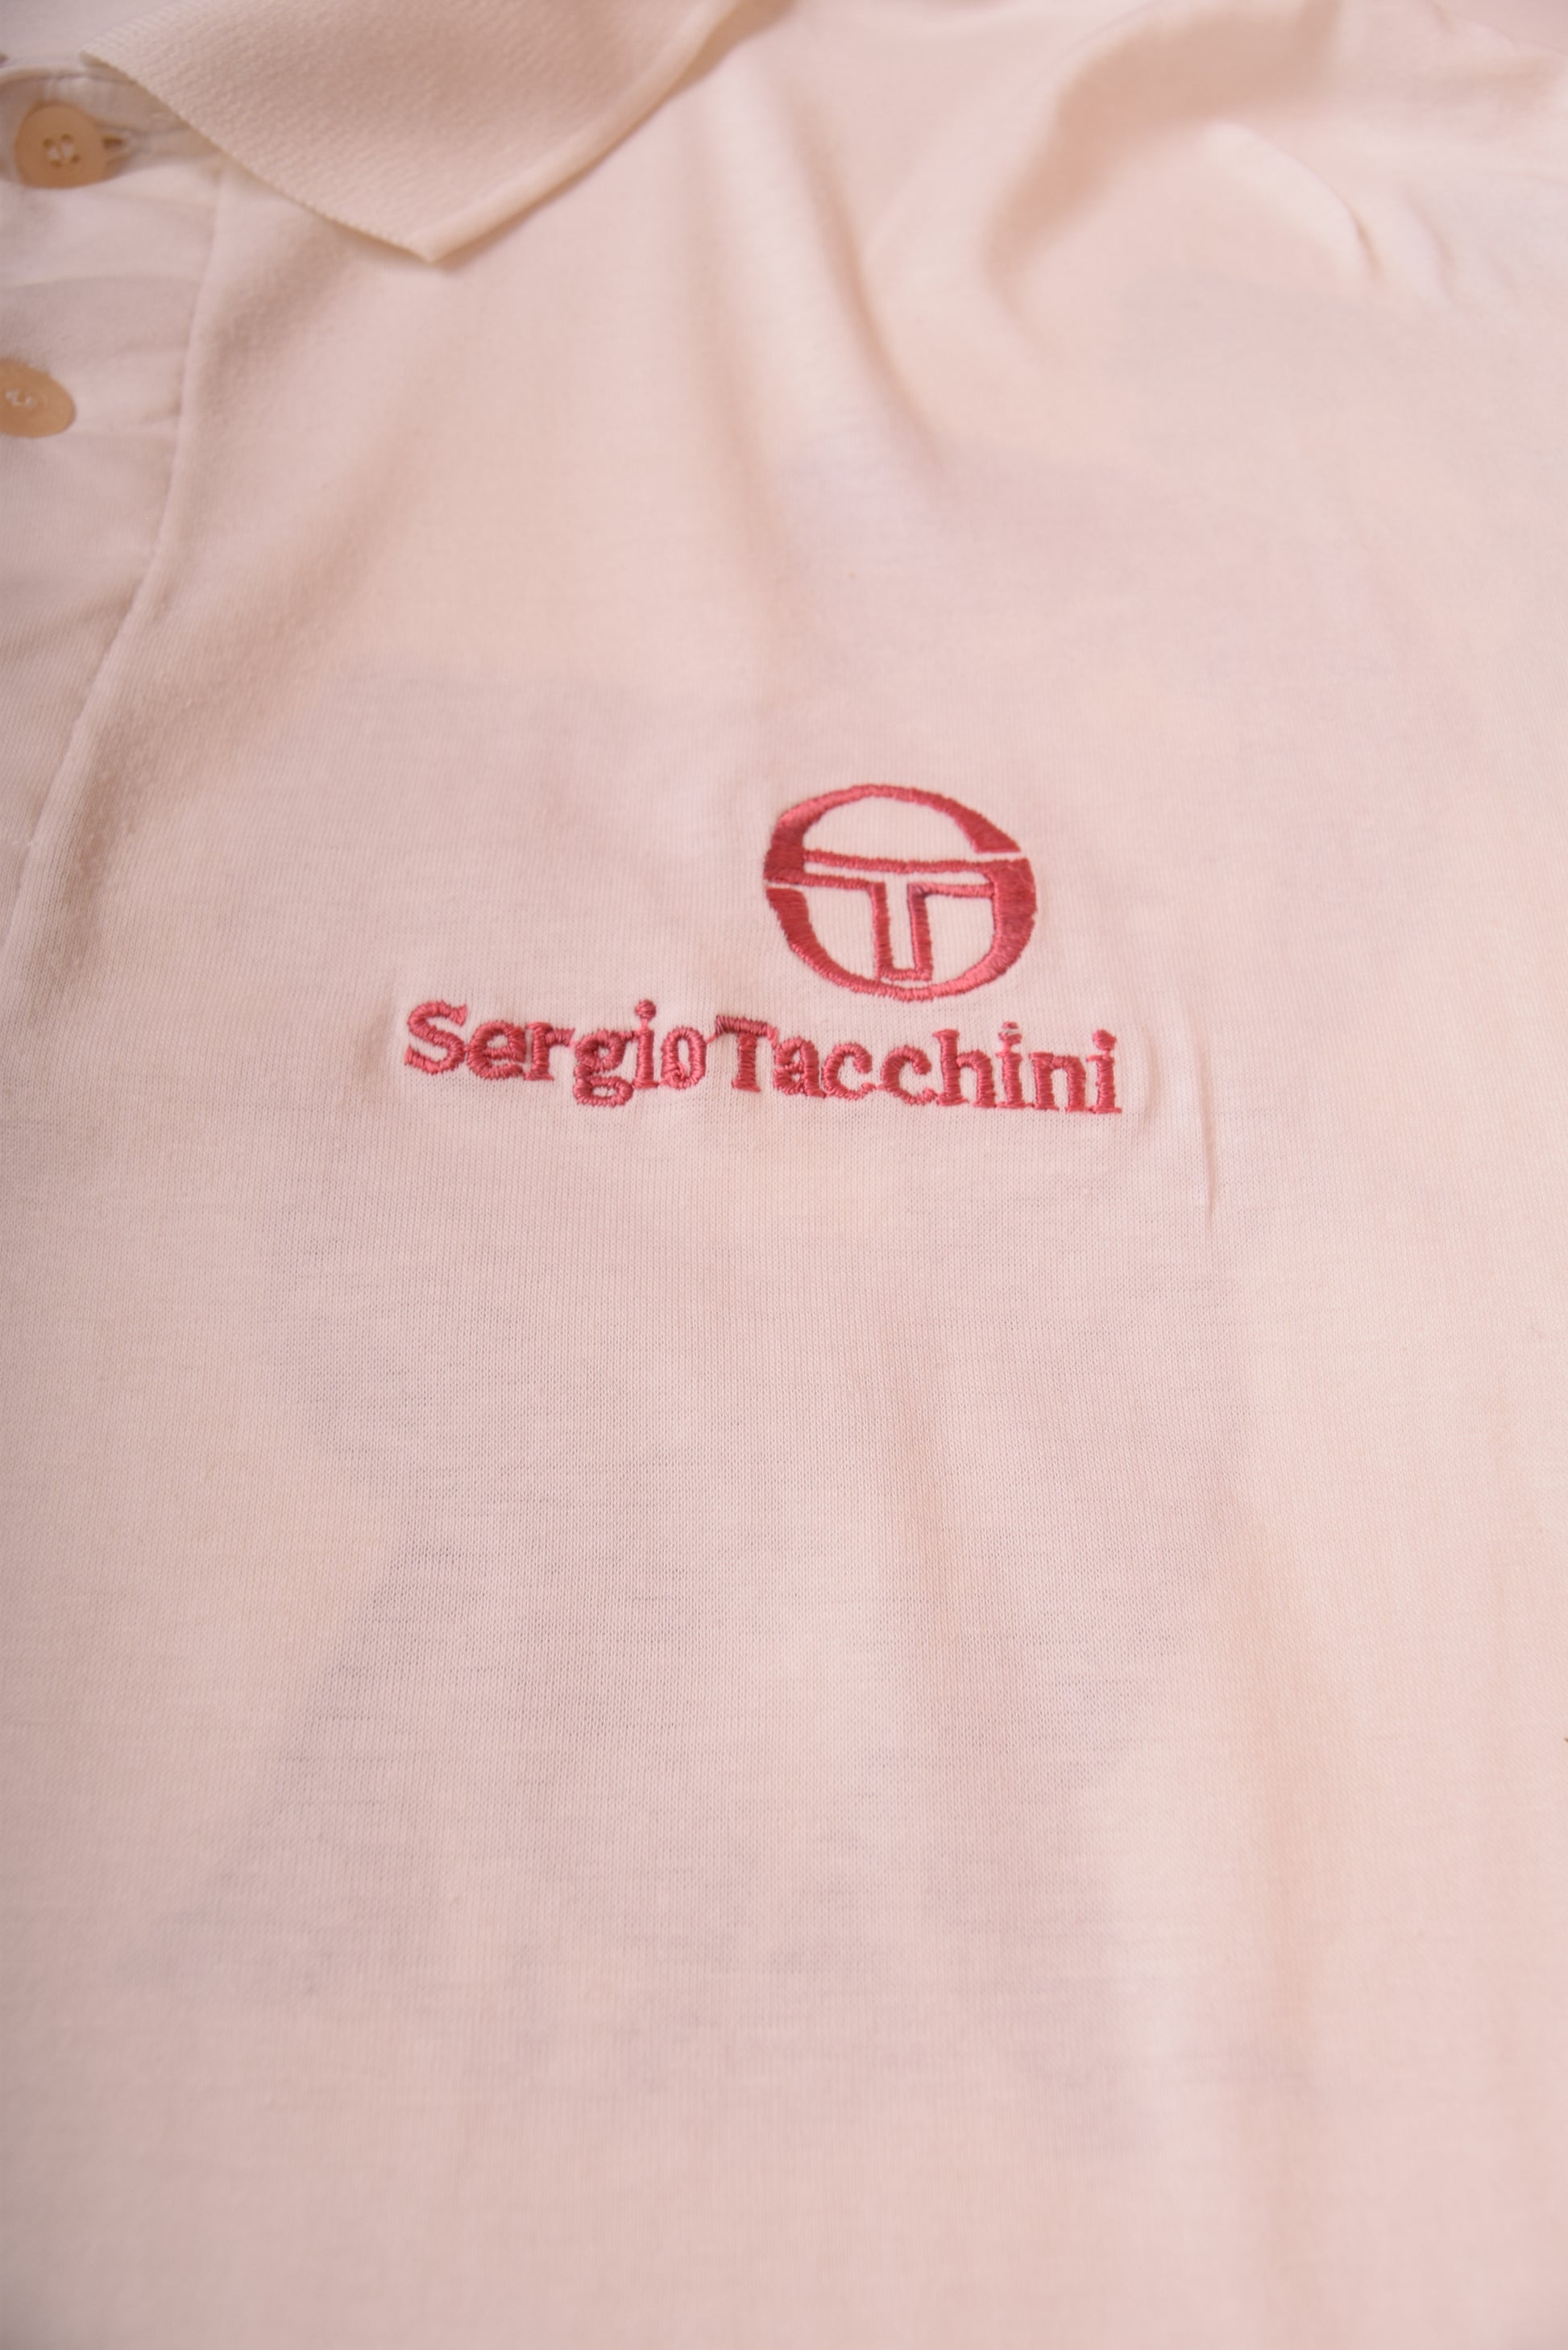 Vintage Sergio Tacchini Tennis Polo Shirt Made in Korea Size L